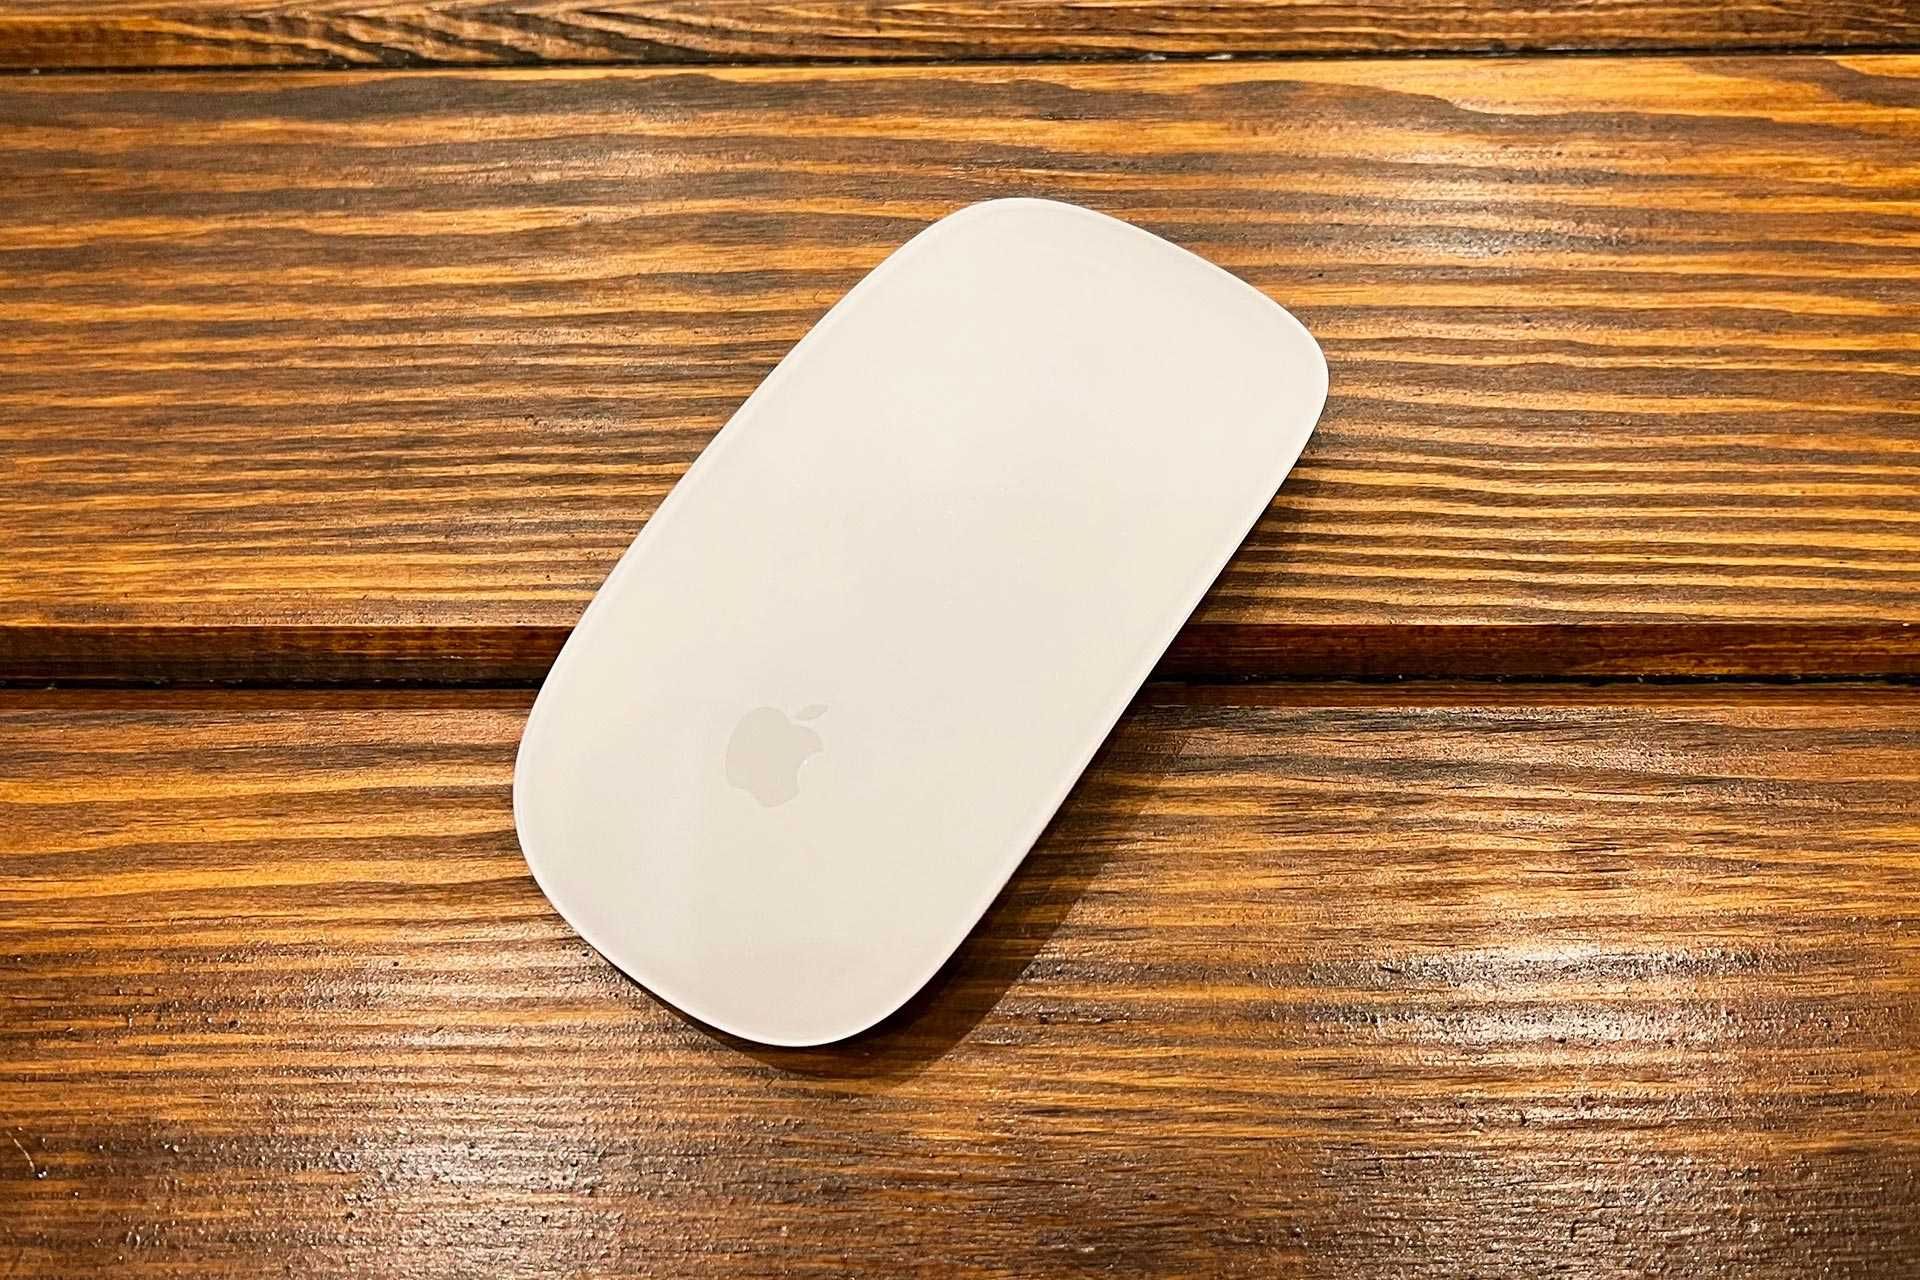 Mysz Magic Mouse A1657 kolor biały - Apple + etui